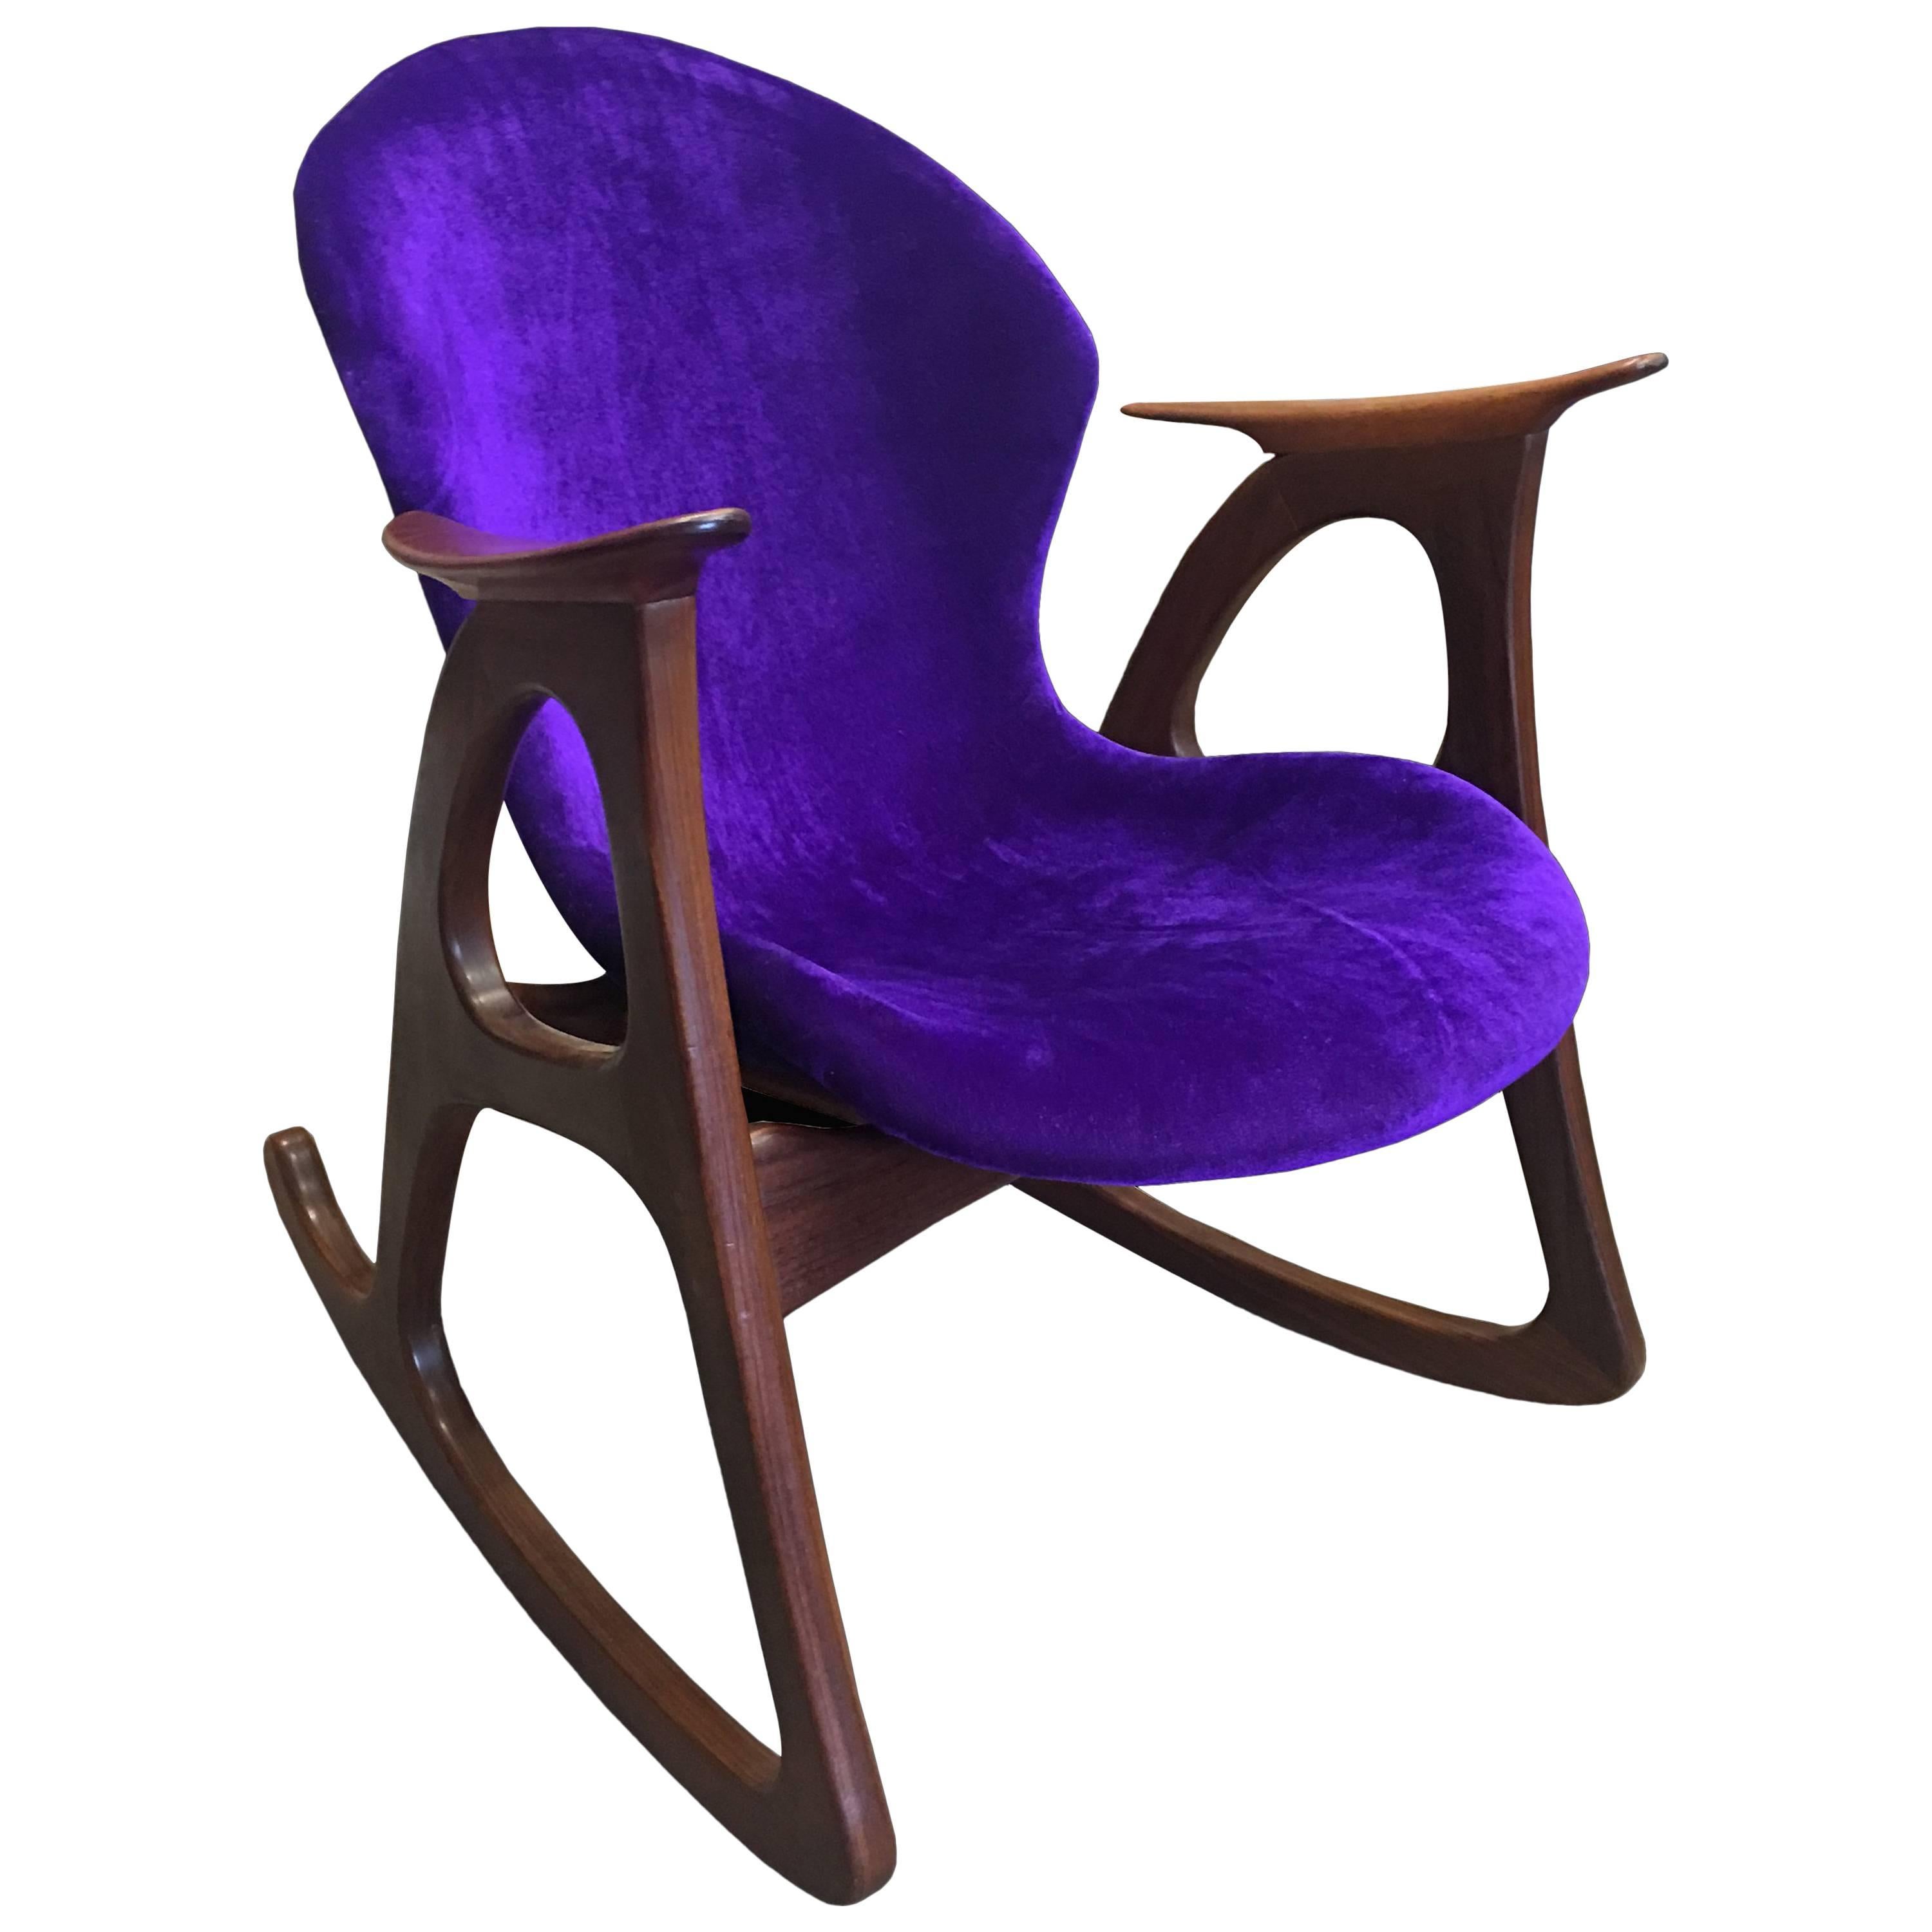 Danish Modern Rocking Chair Designed by Aage Christiansen